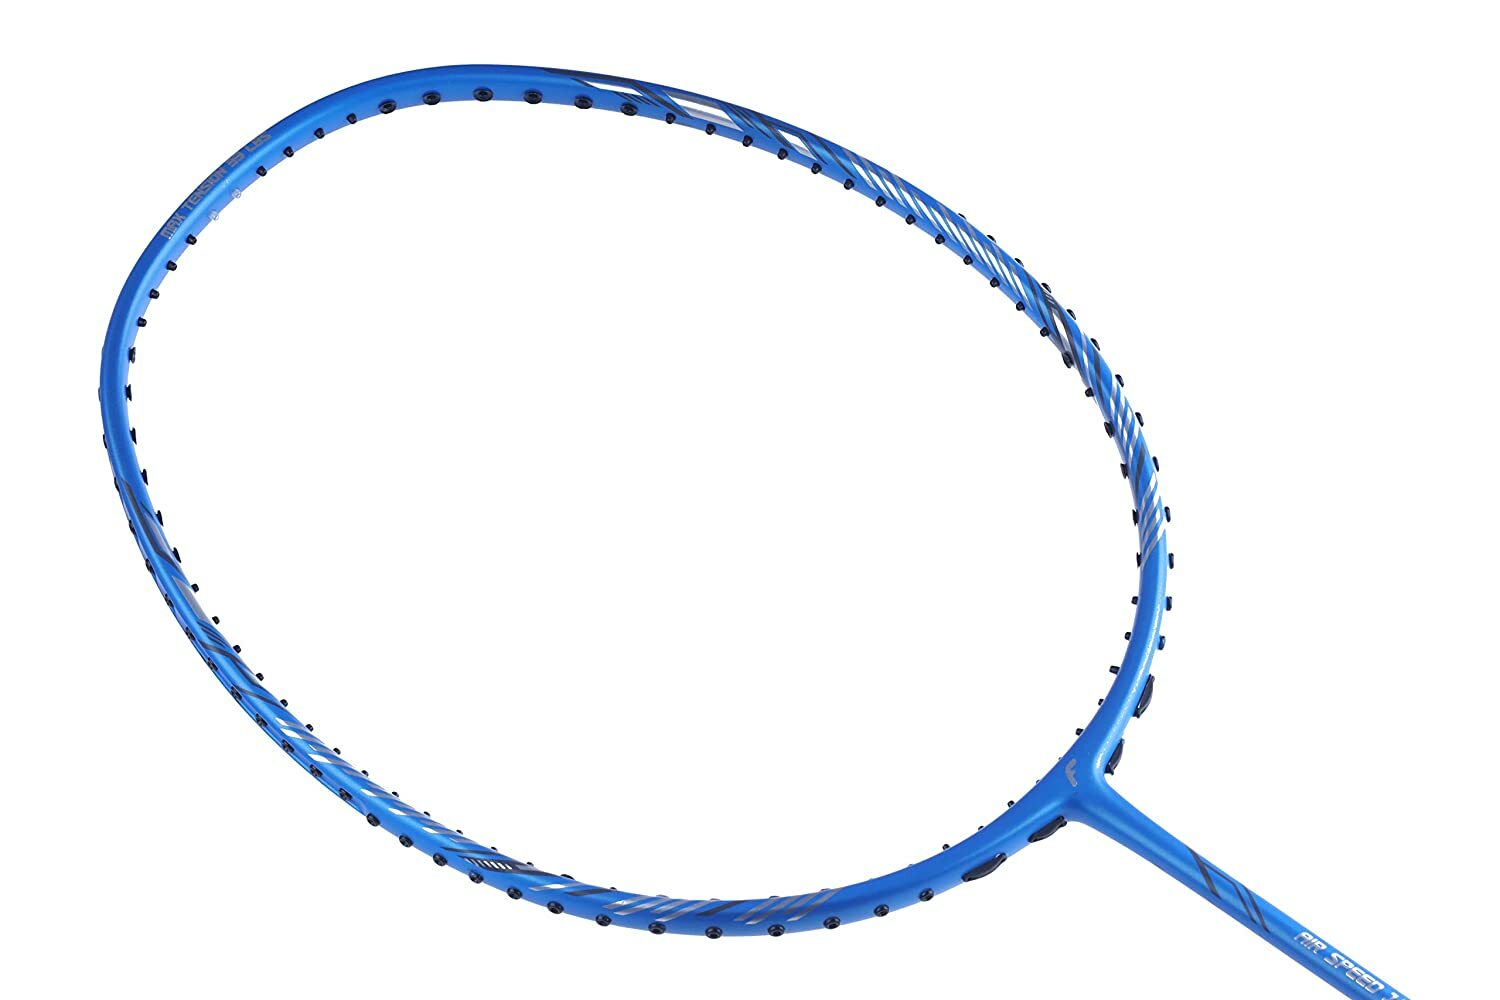 Flex Power Air Speed 12 Mega Tension - 33LBS Full Graphite Badminton Racquet with Full Racket Cover Blue